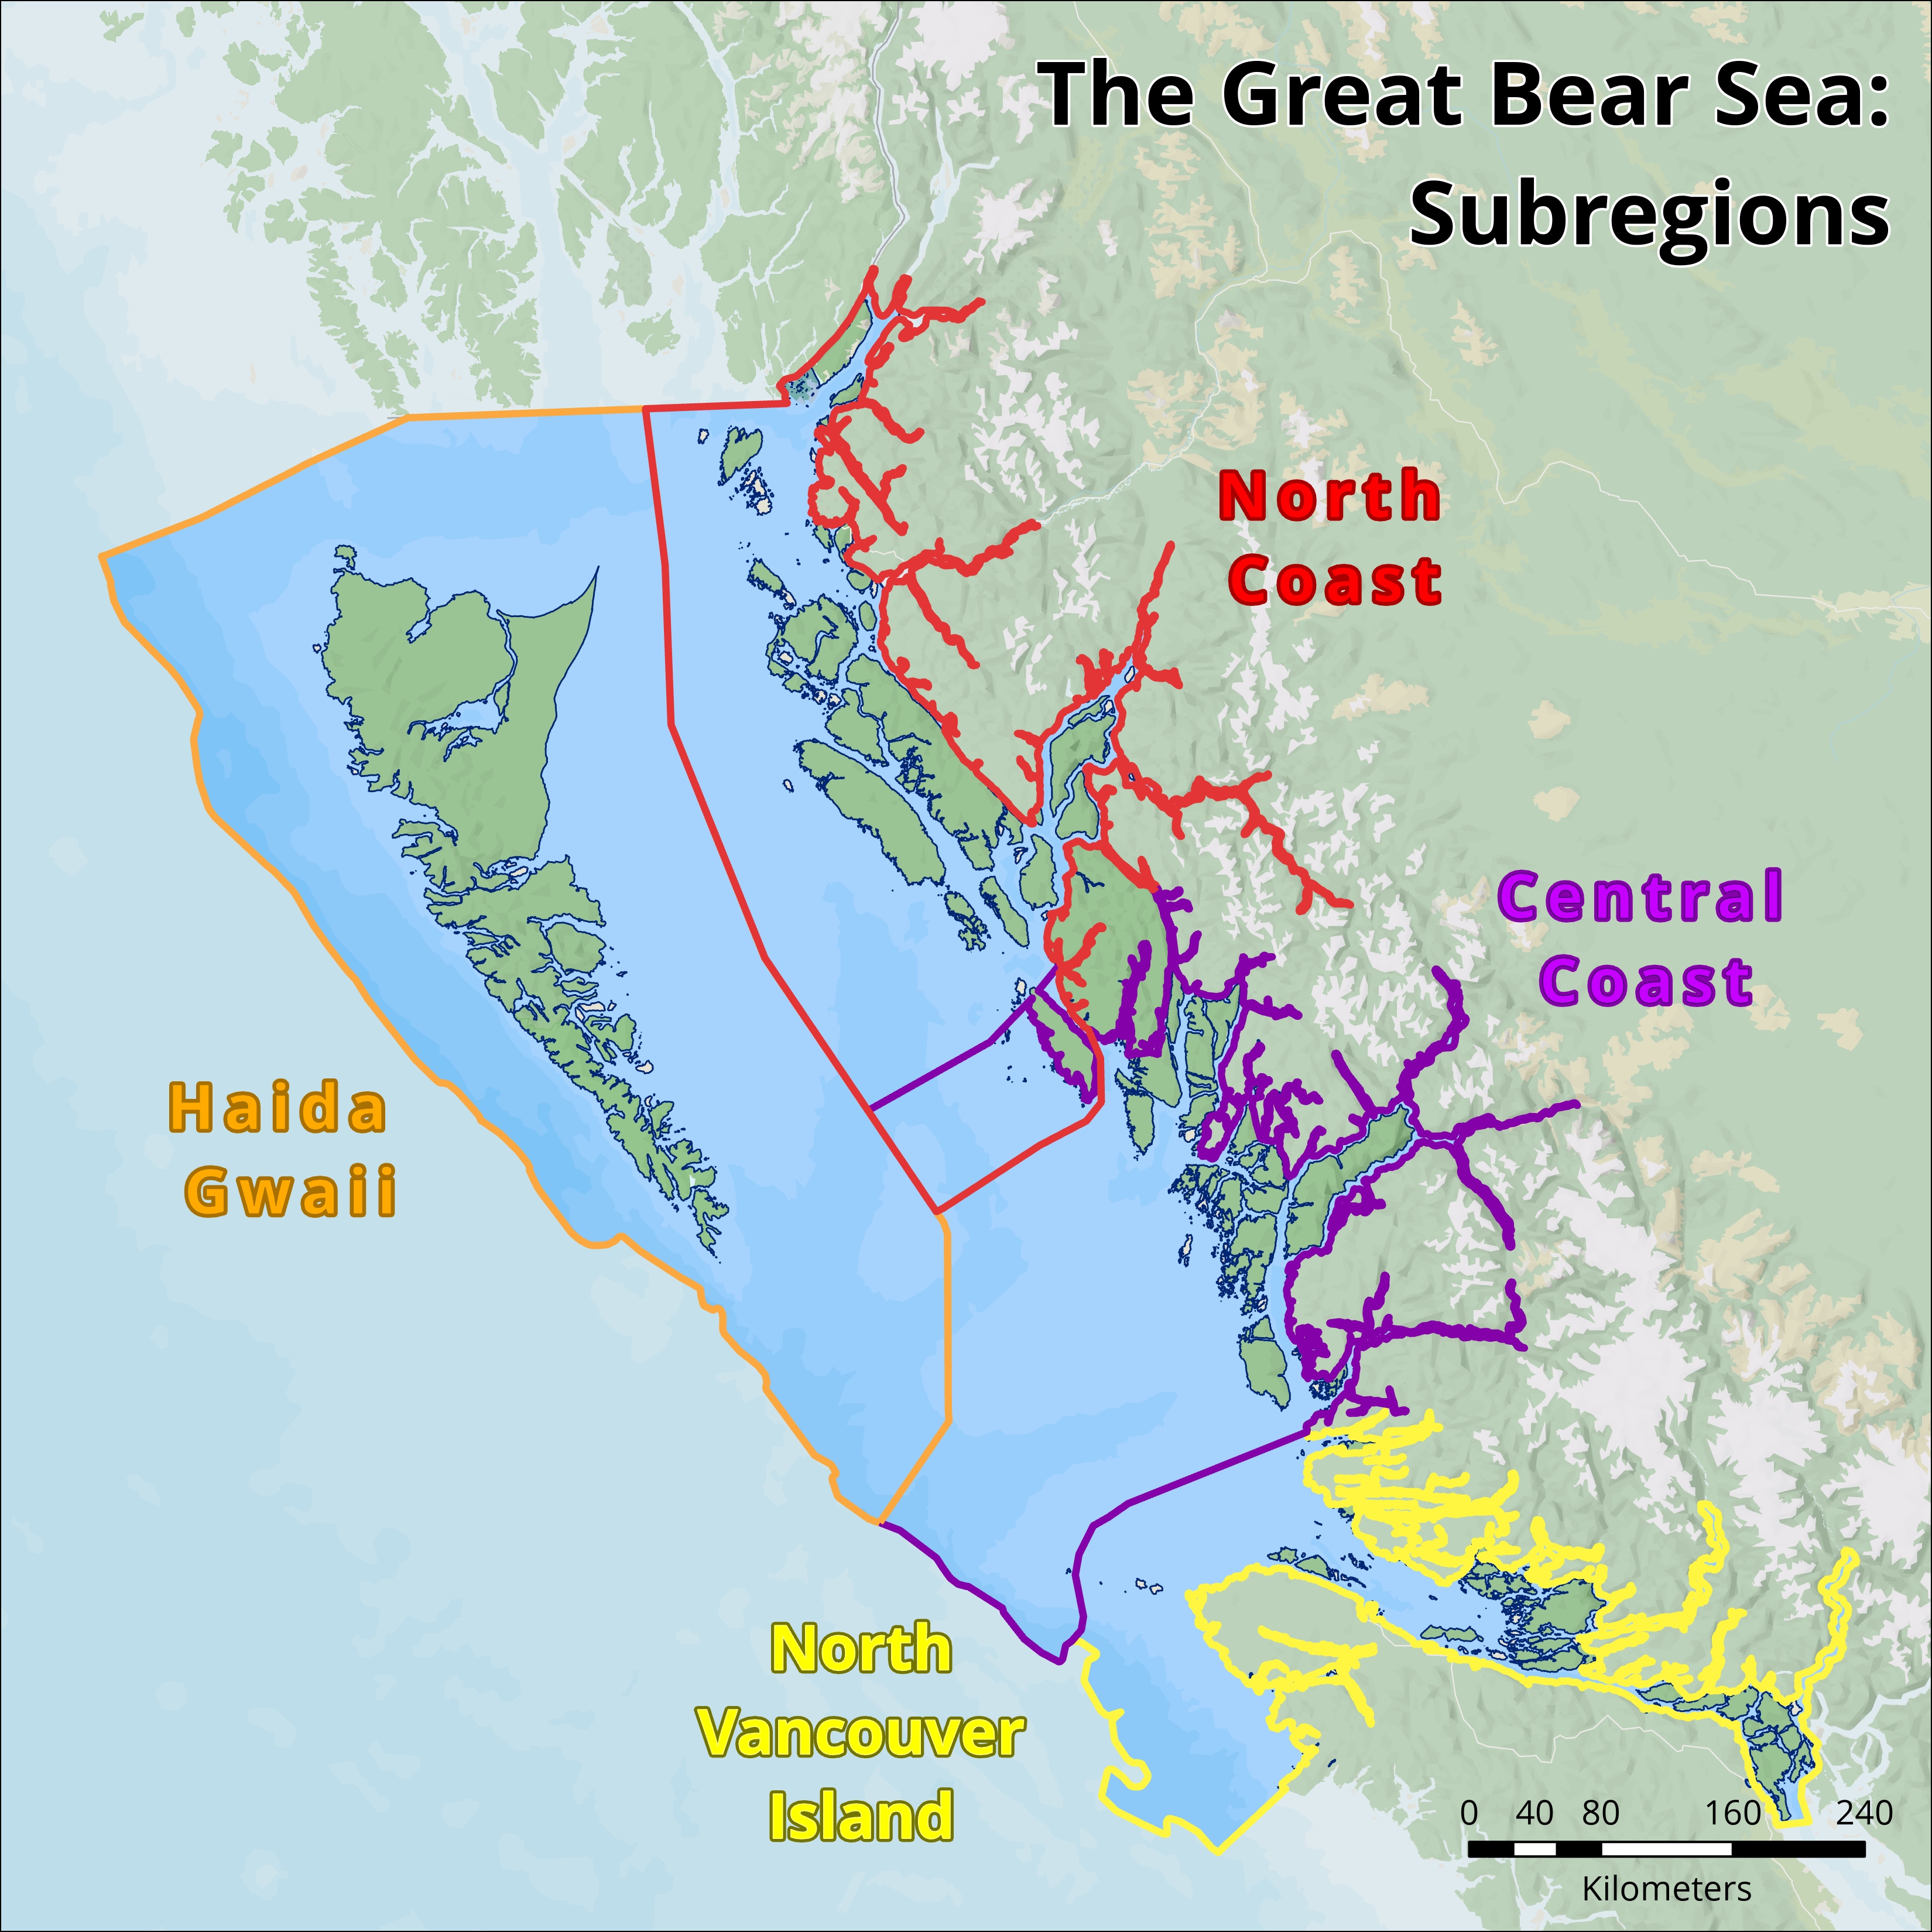 Subregions of the Great Bear Sea